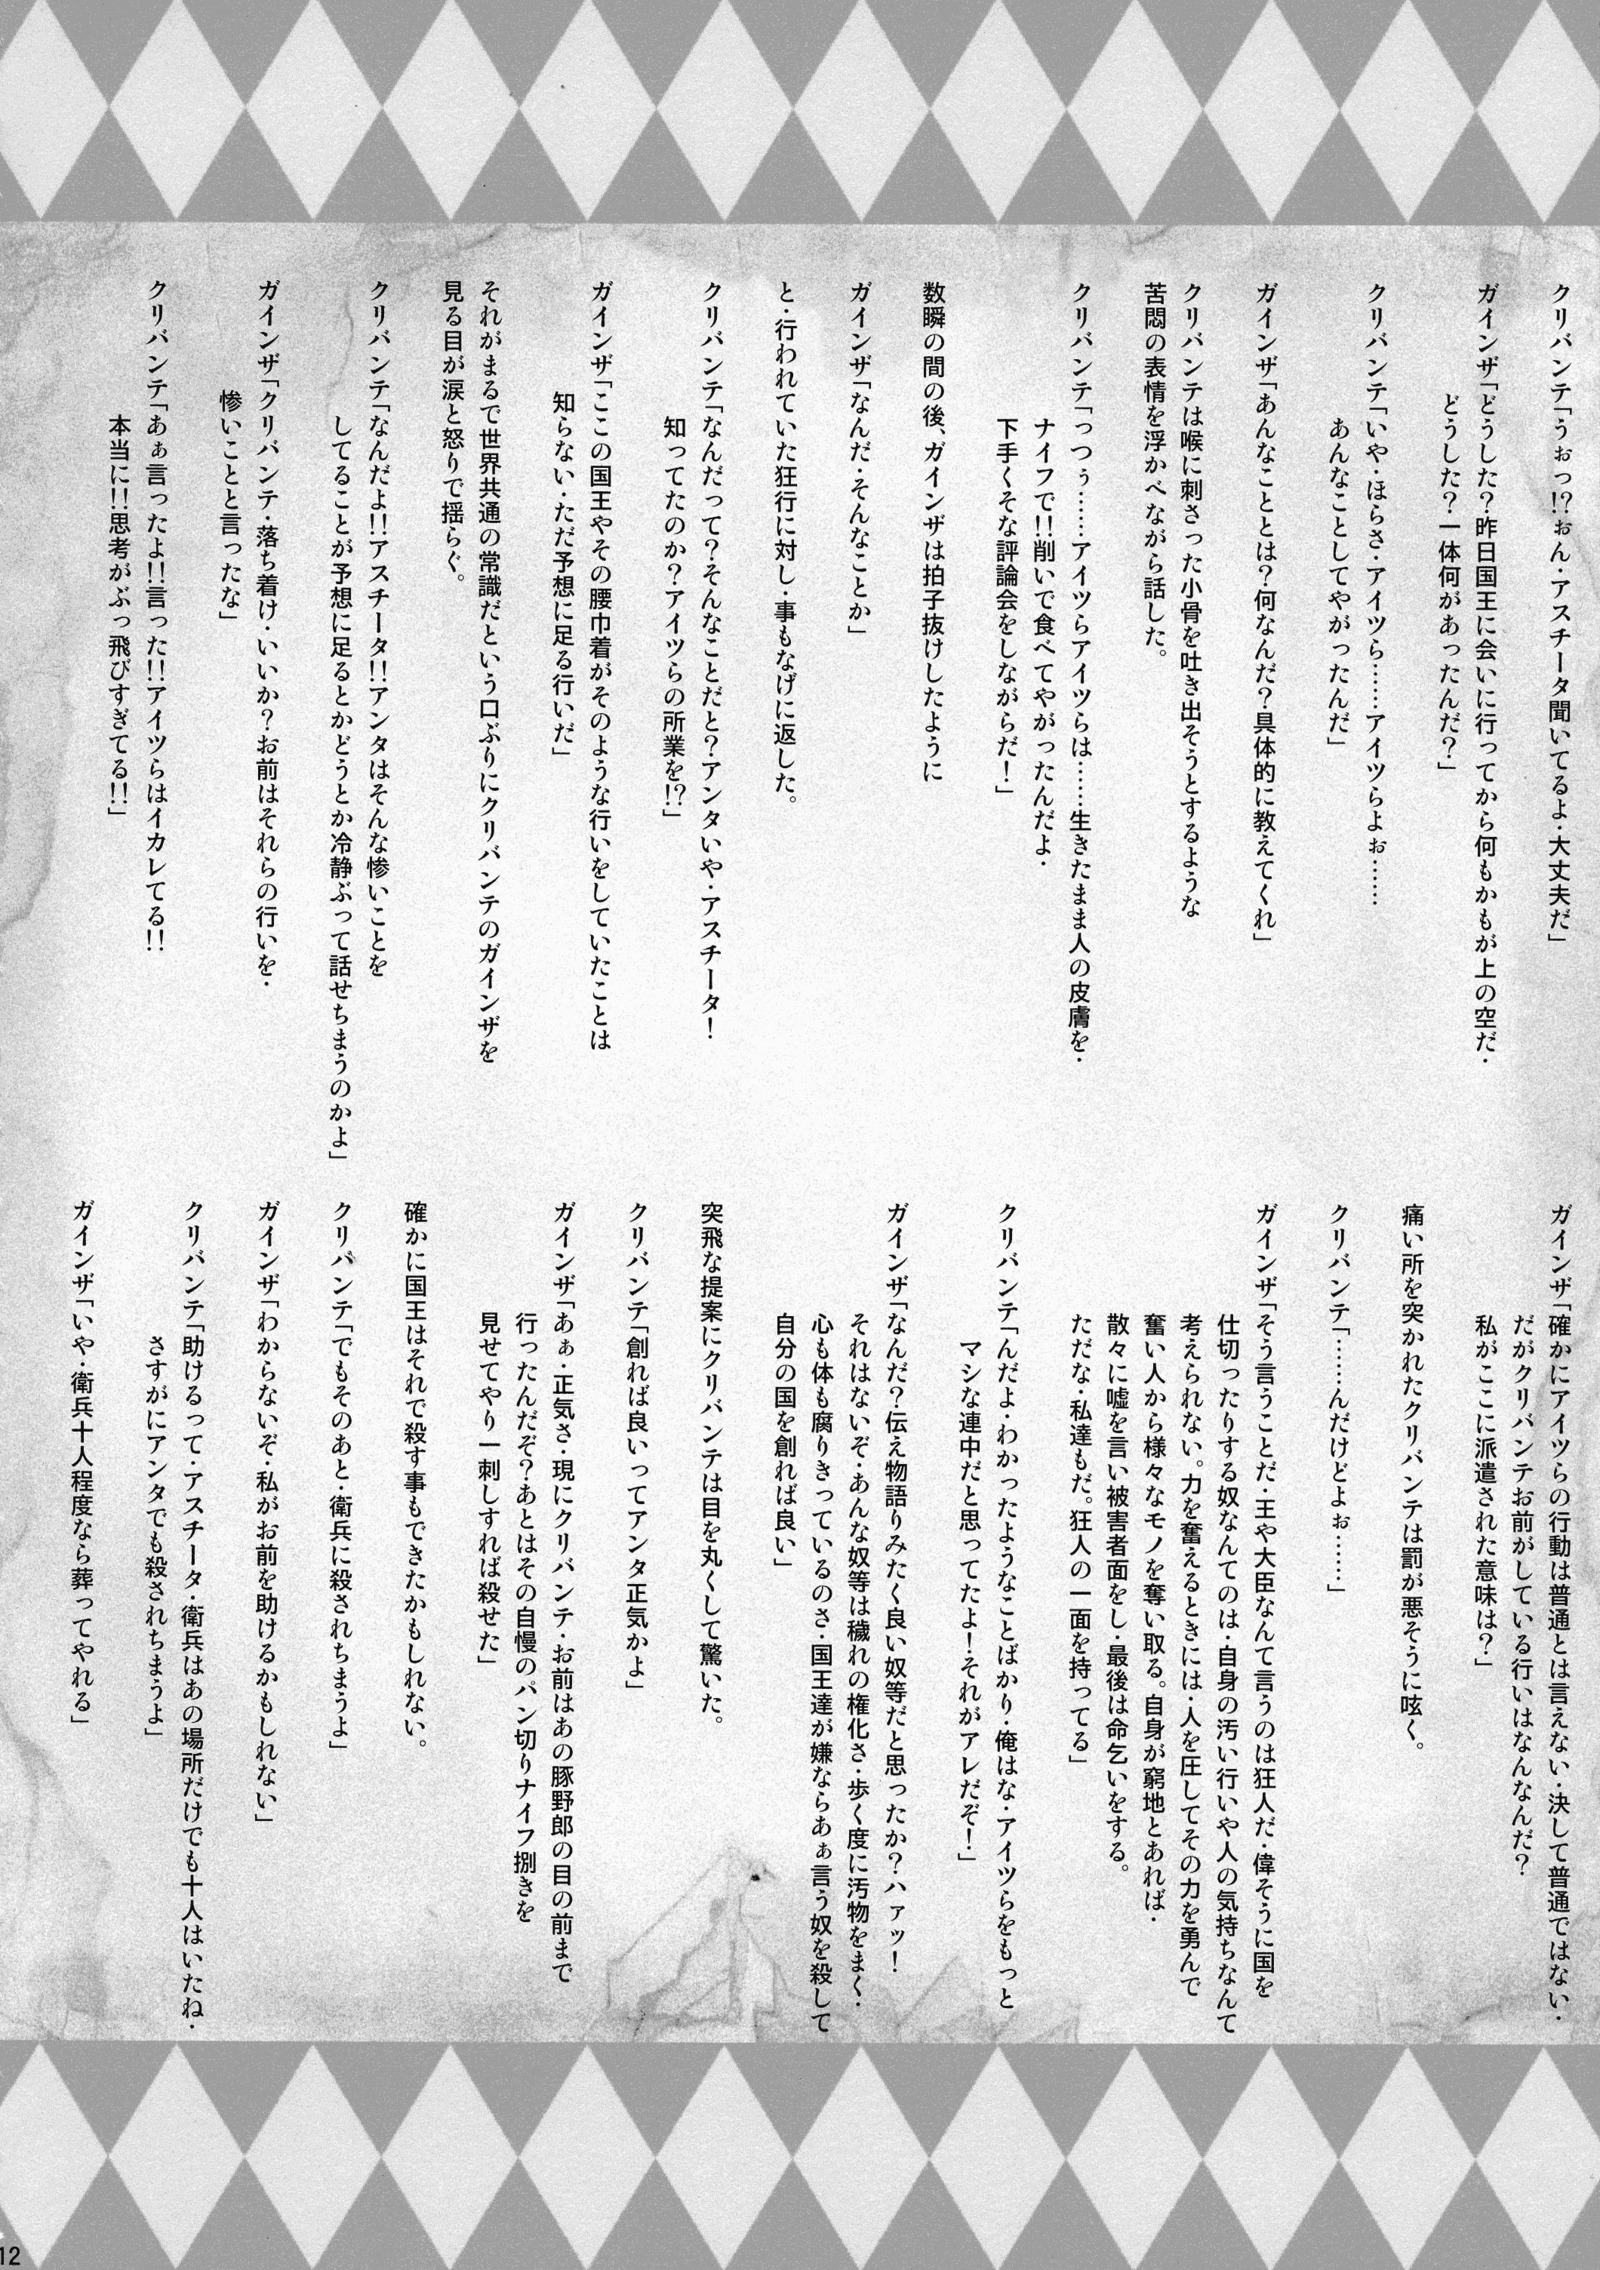 X∞MODEL] GUND CUNNUM vol.1 Shussan Bokujou Kaiaruna-hen